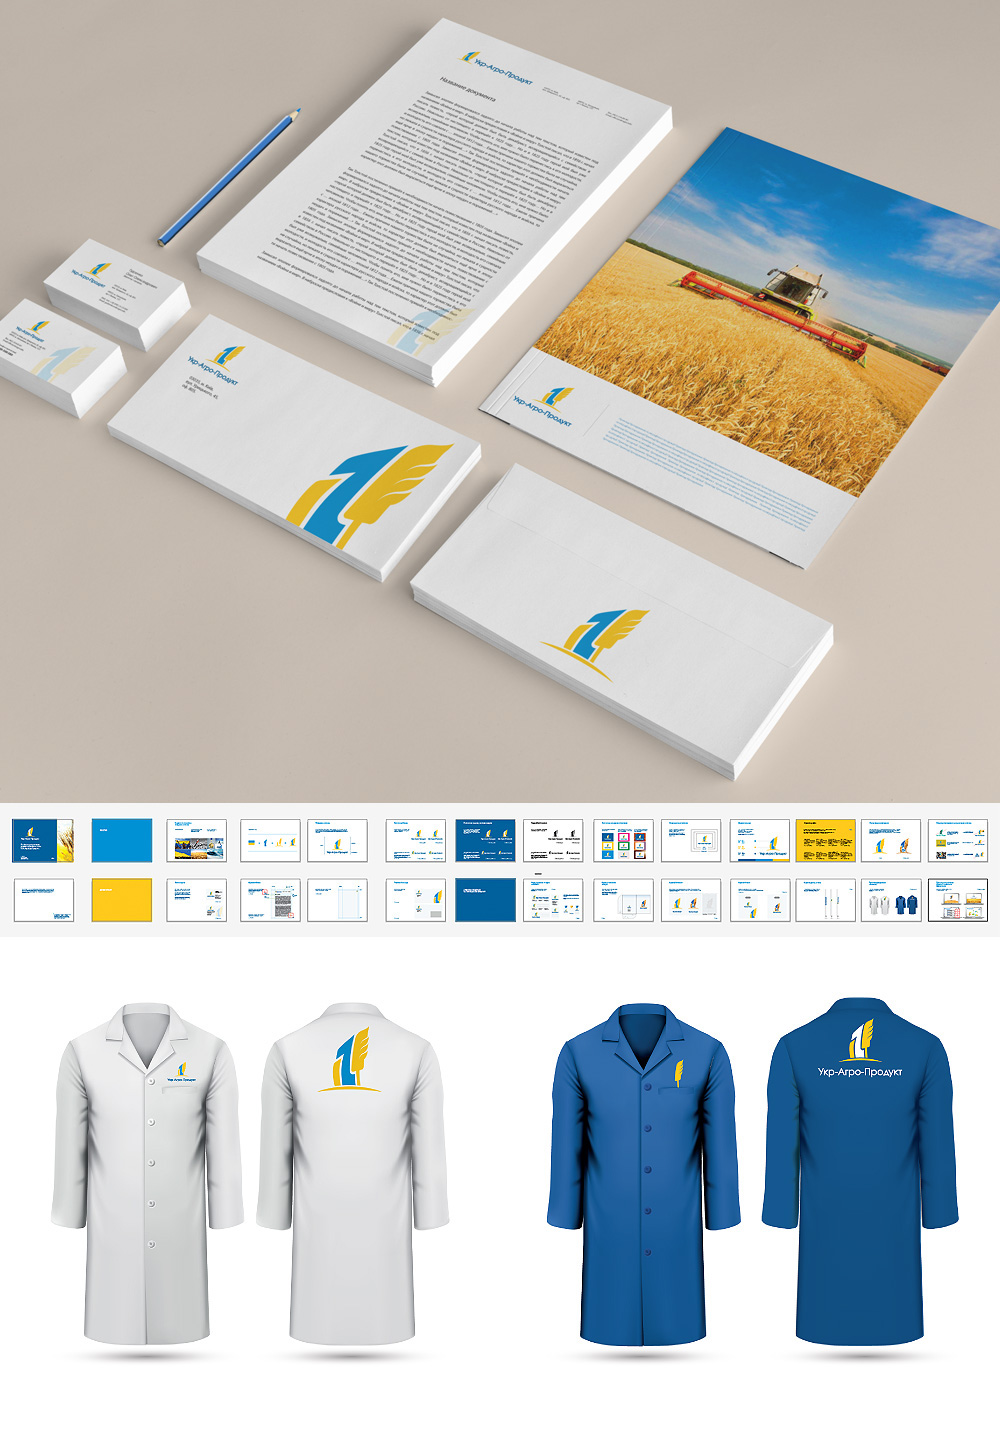 Ukr-Agro-product identity Pioneer design PNRDSGN Corporate Identity